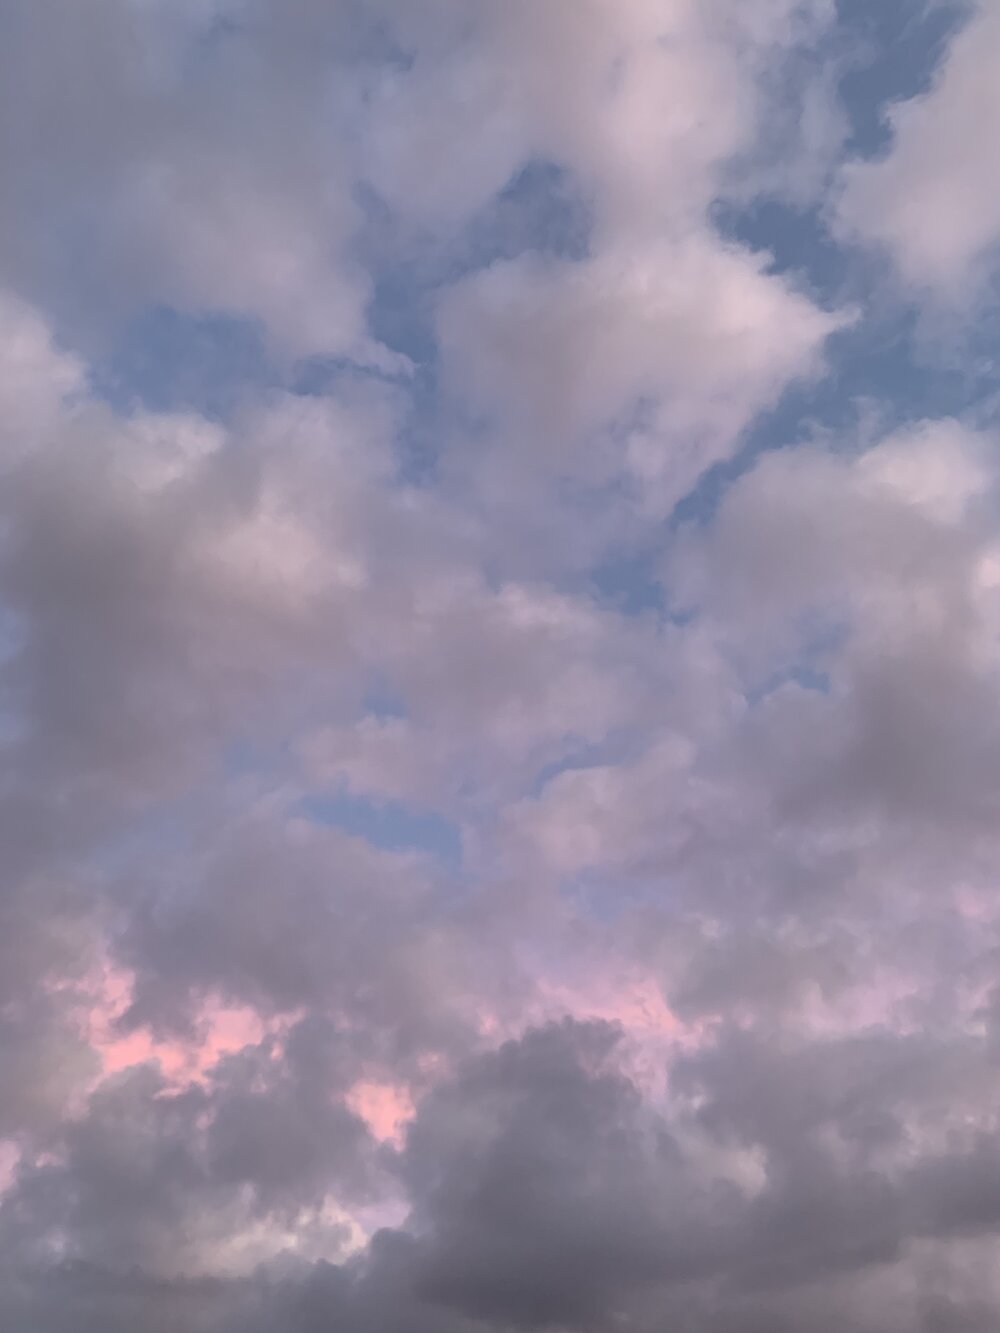 Essaouria clouds #1.jpg